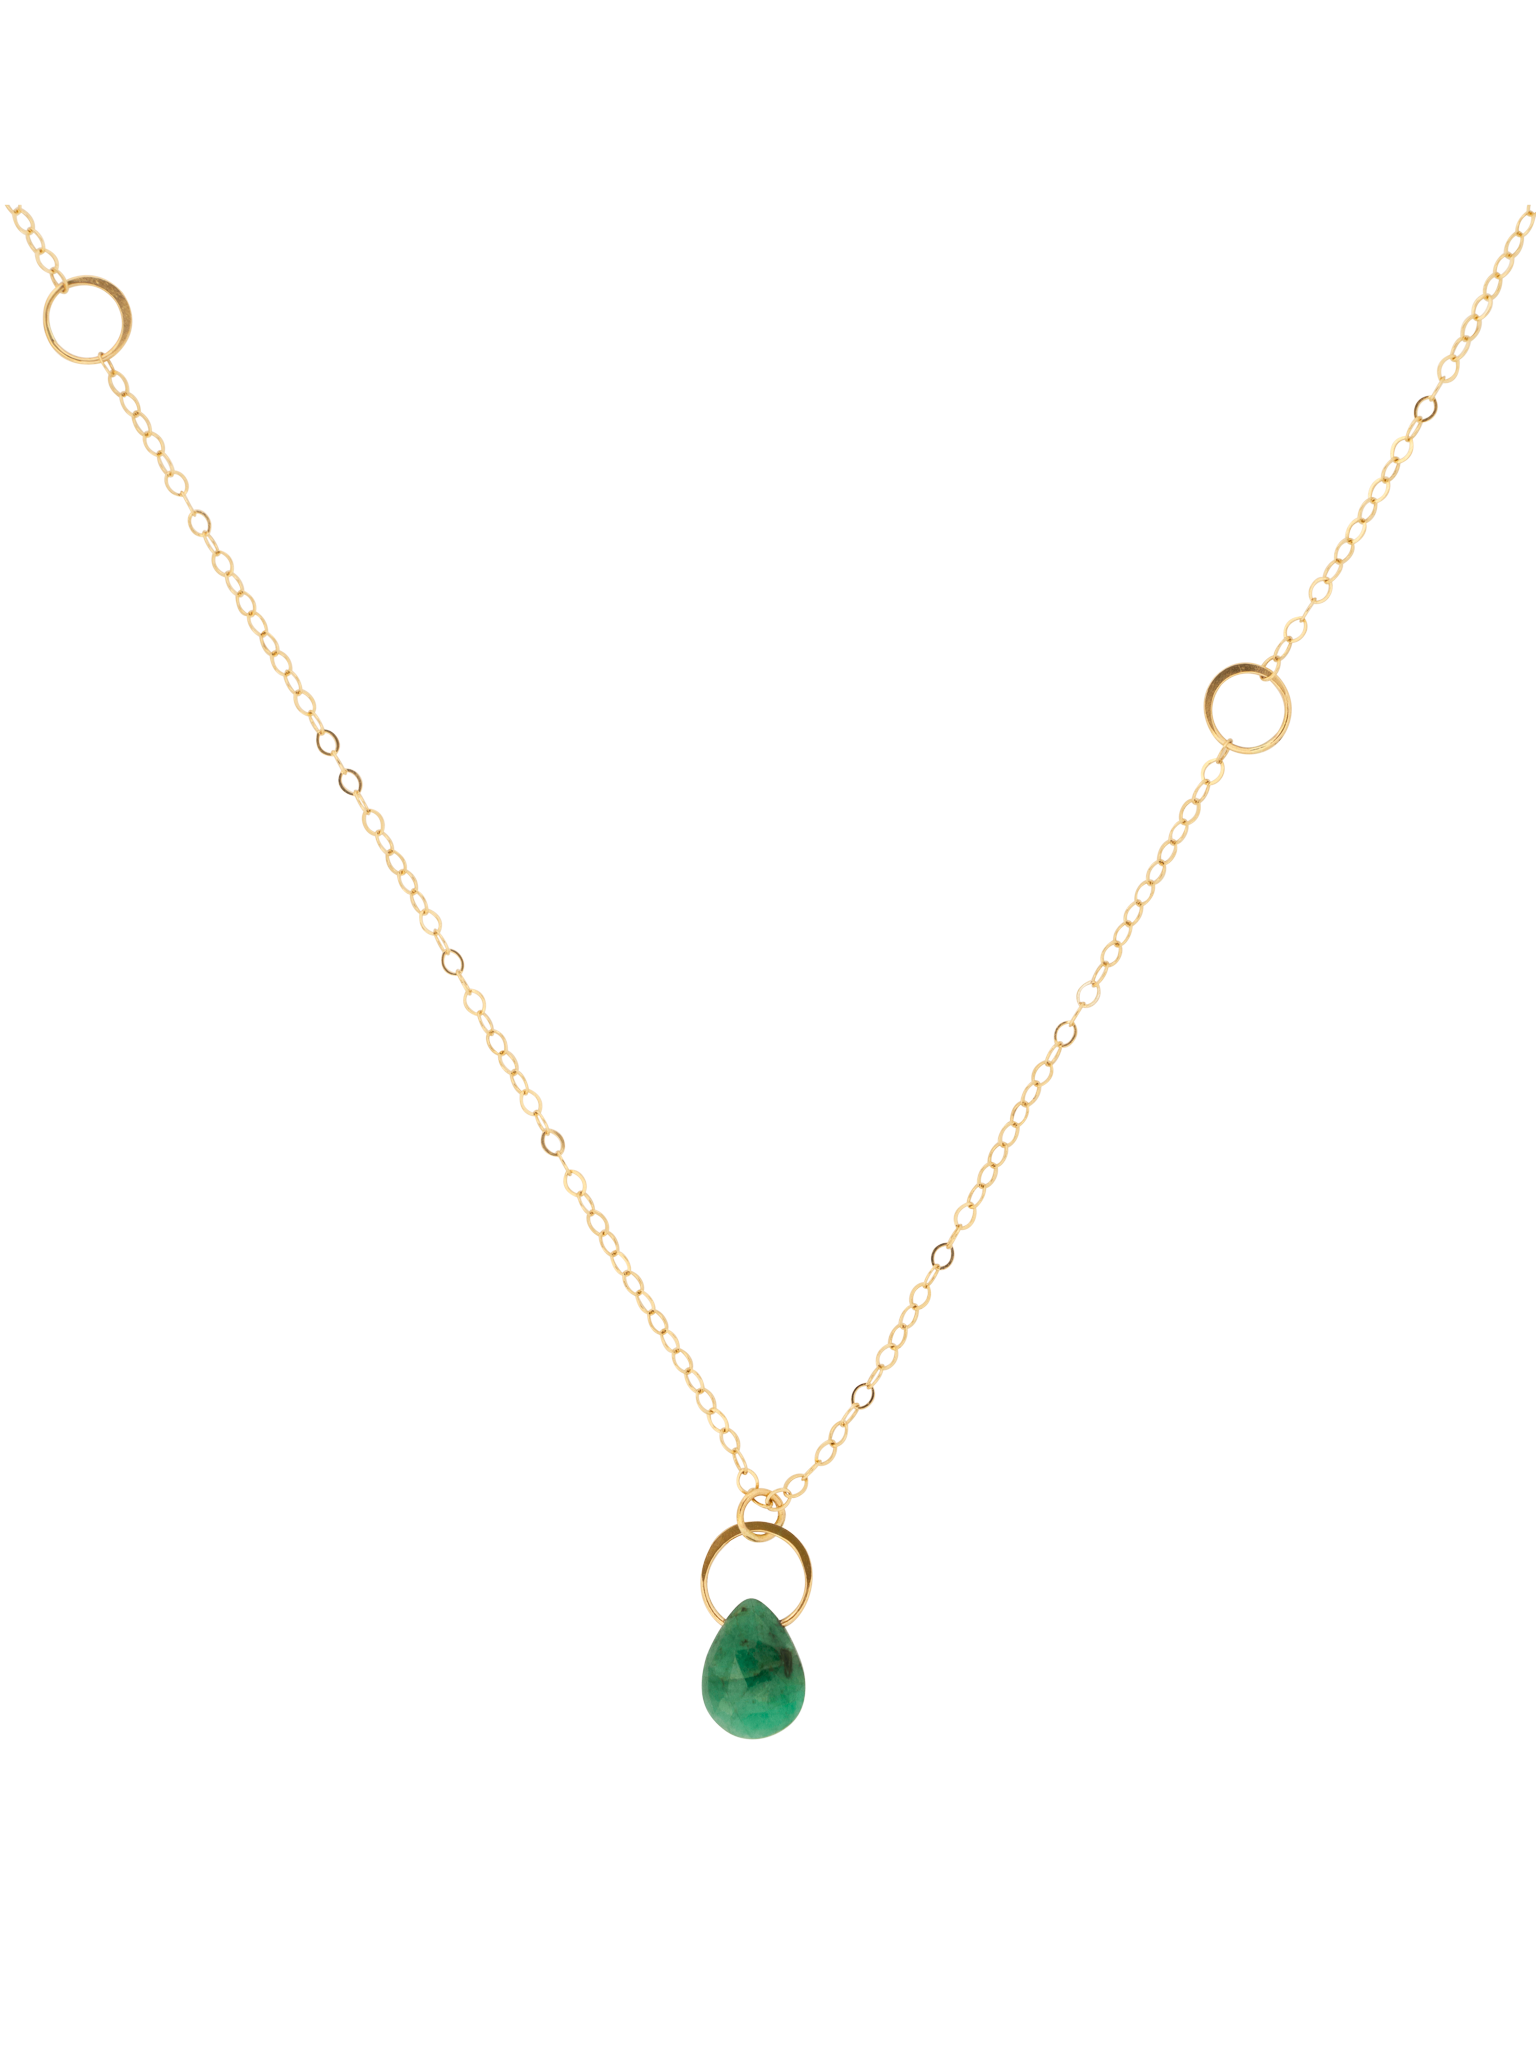 Emerald single drop necklace photo 1